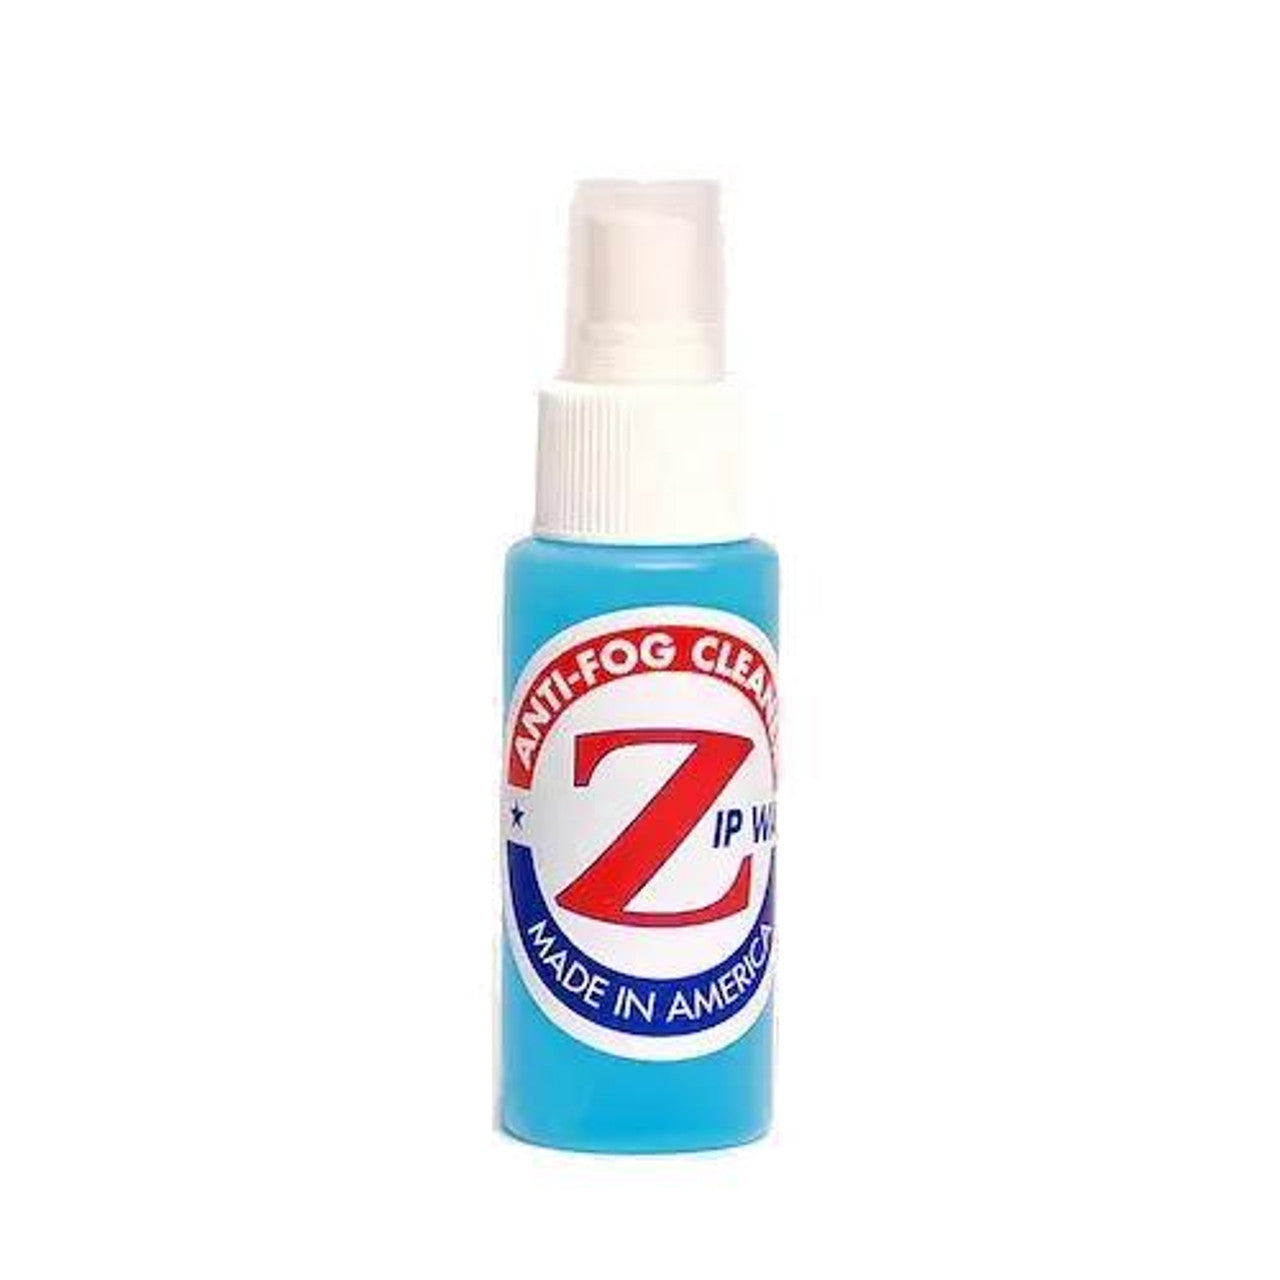 Zipwax Antifog Cleaner Spray 4oz.